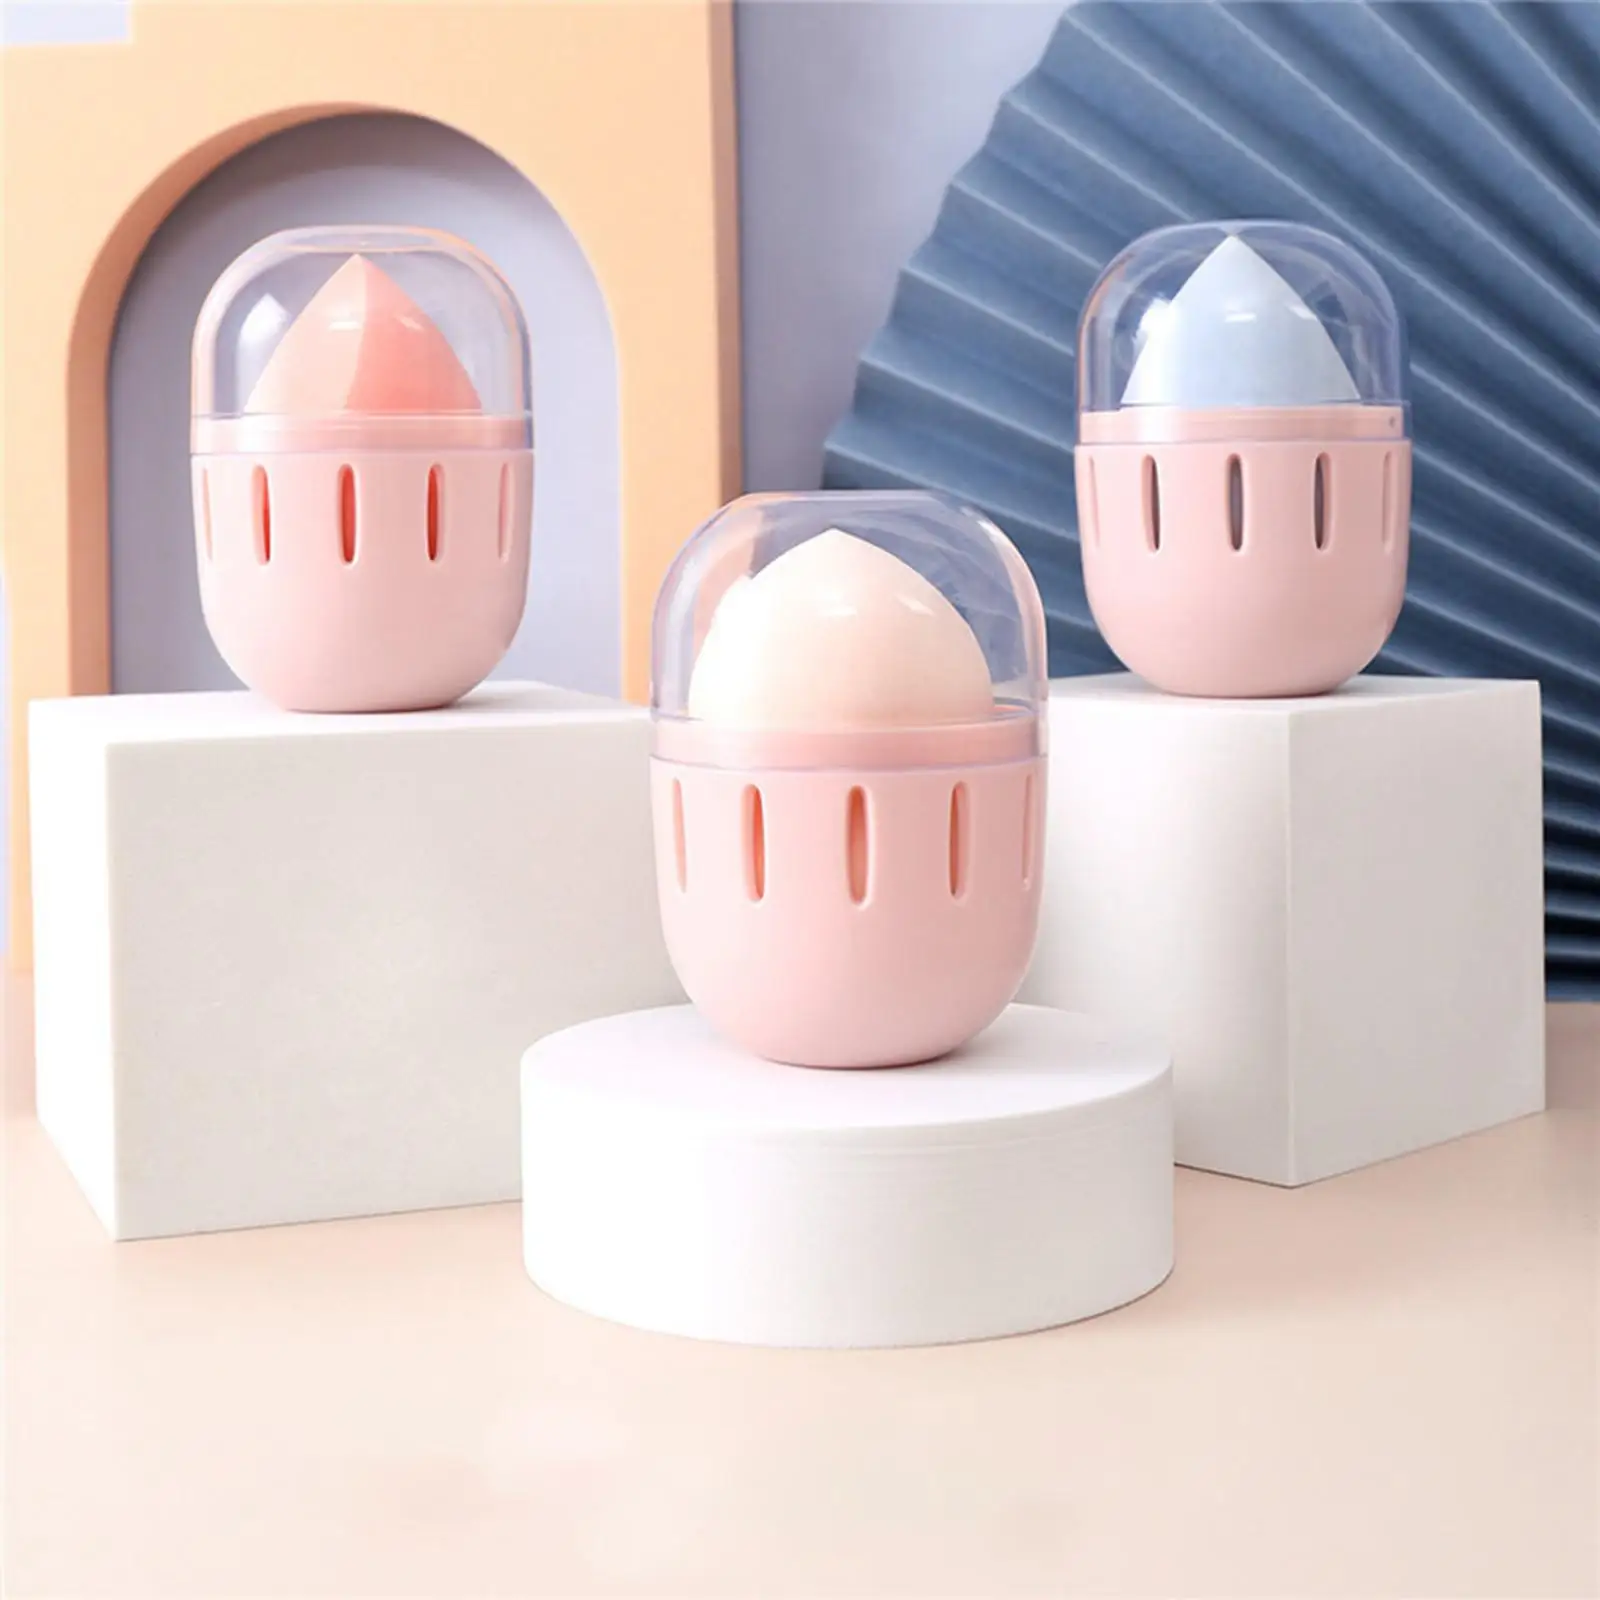 Portable Makeup Sponge Holder Ventilation Carrying Case Beauty Cosmetic Egg Sponge Organizer Case Drying Holder for Travel Home